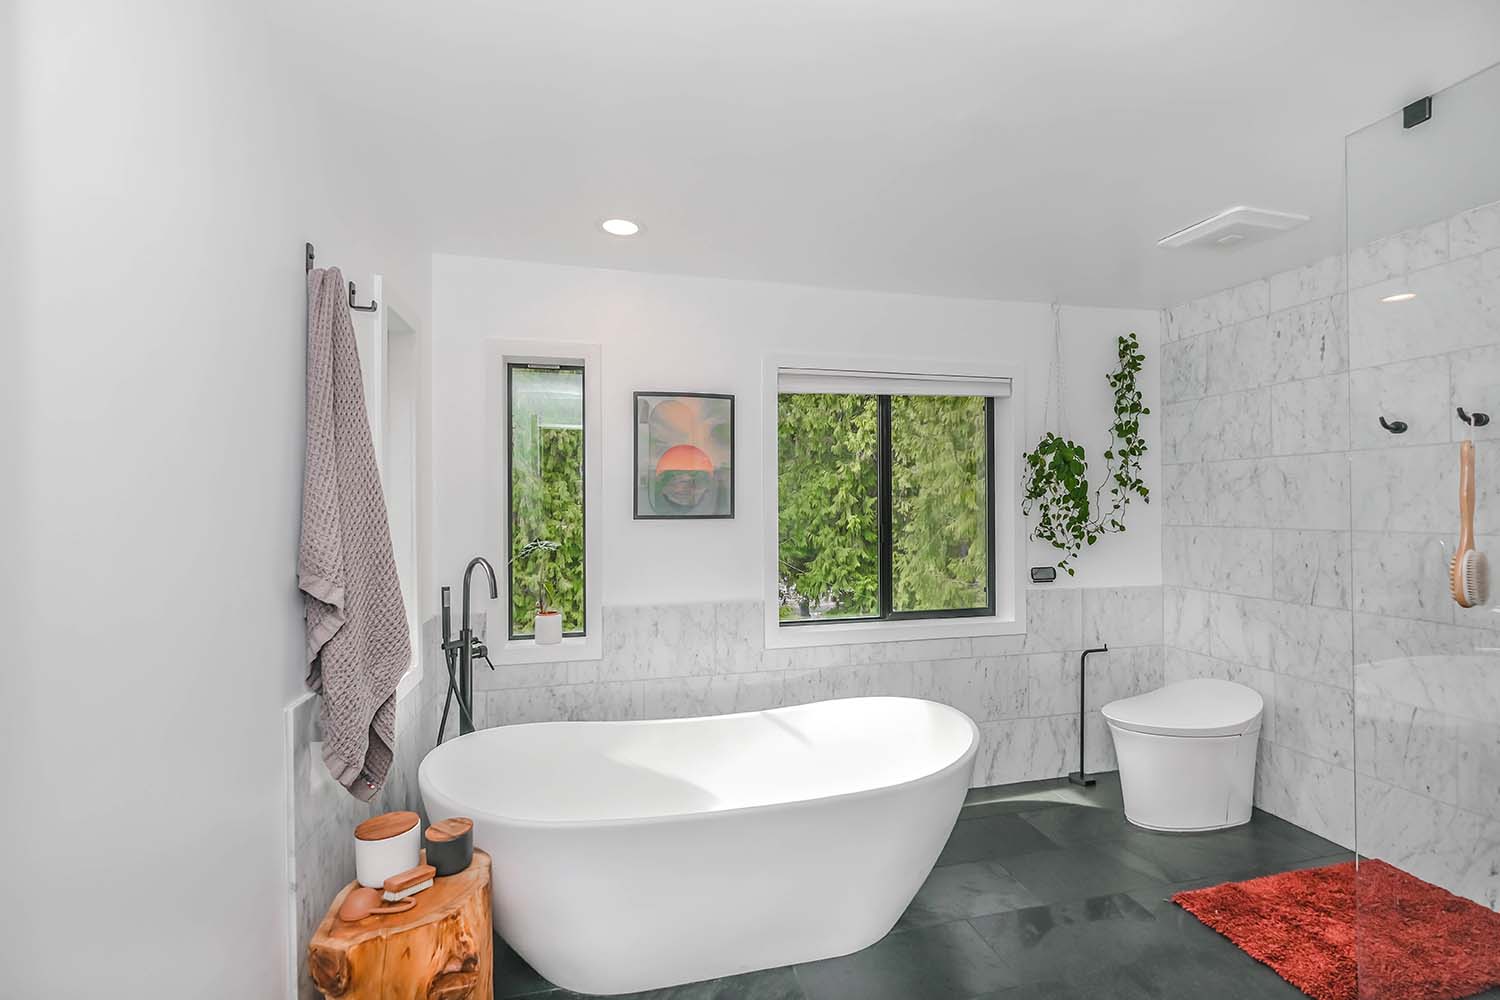 The Best Bathroom Flooring Ideas on a Budget